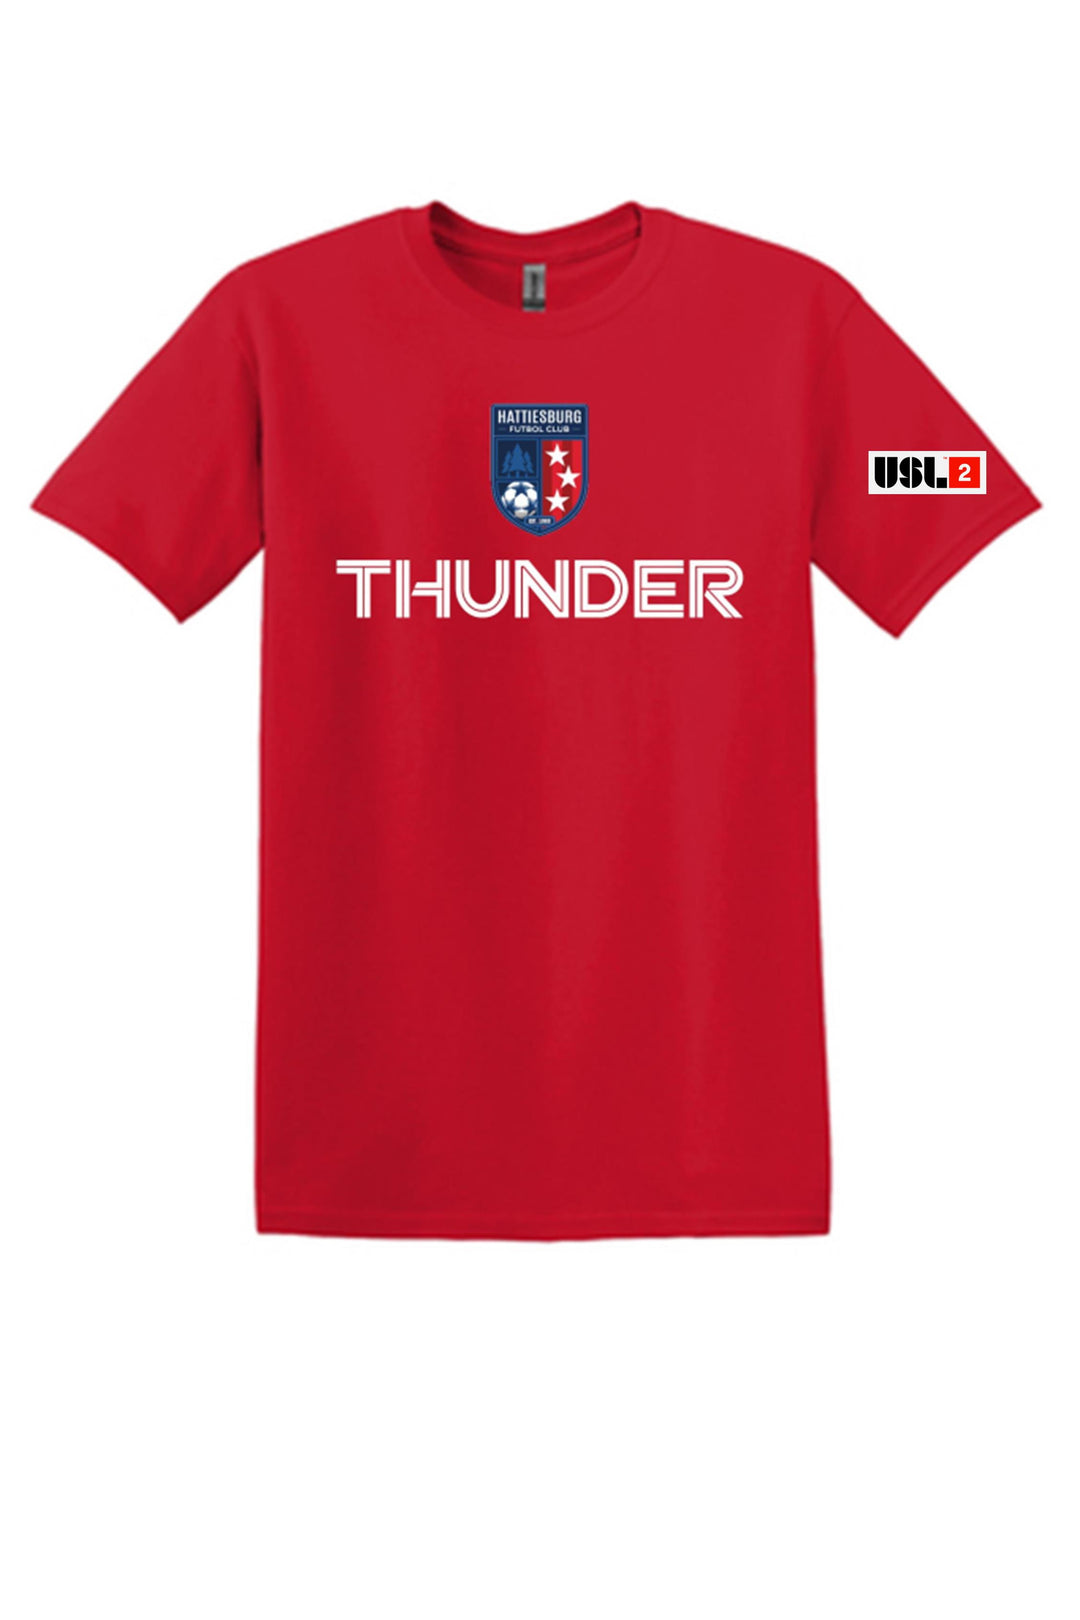 HFC Thunder Performance T-Shirt HFC USL2 Red Mens Small - Third Coast Soccer